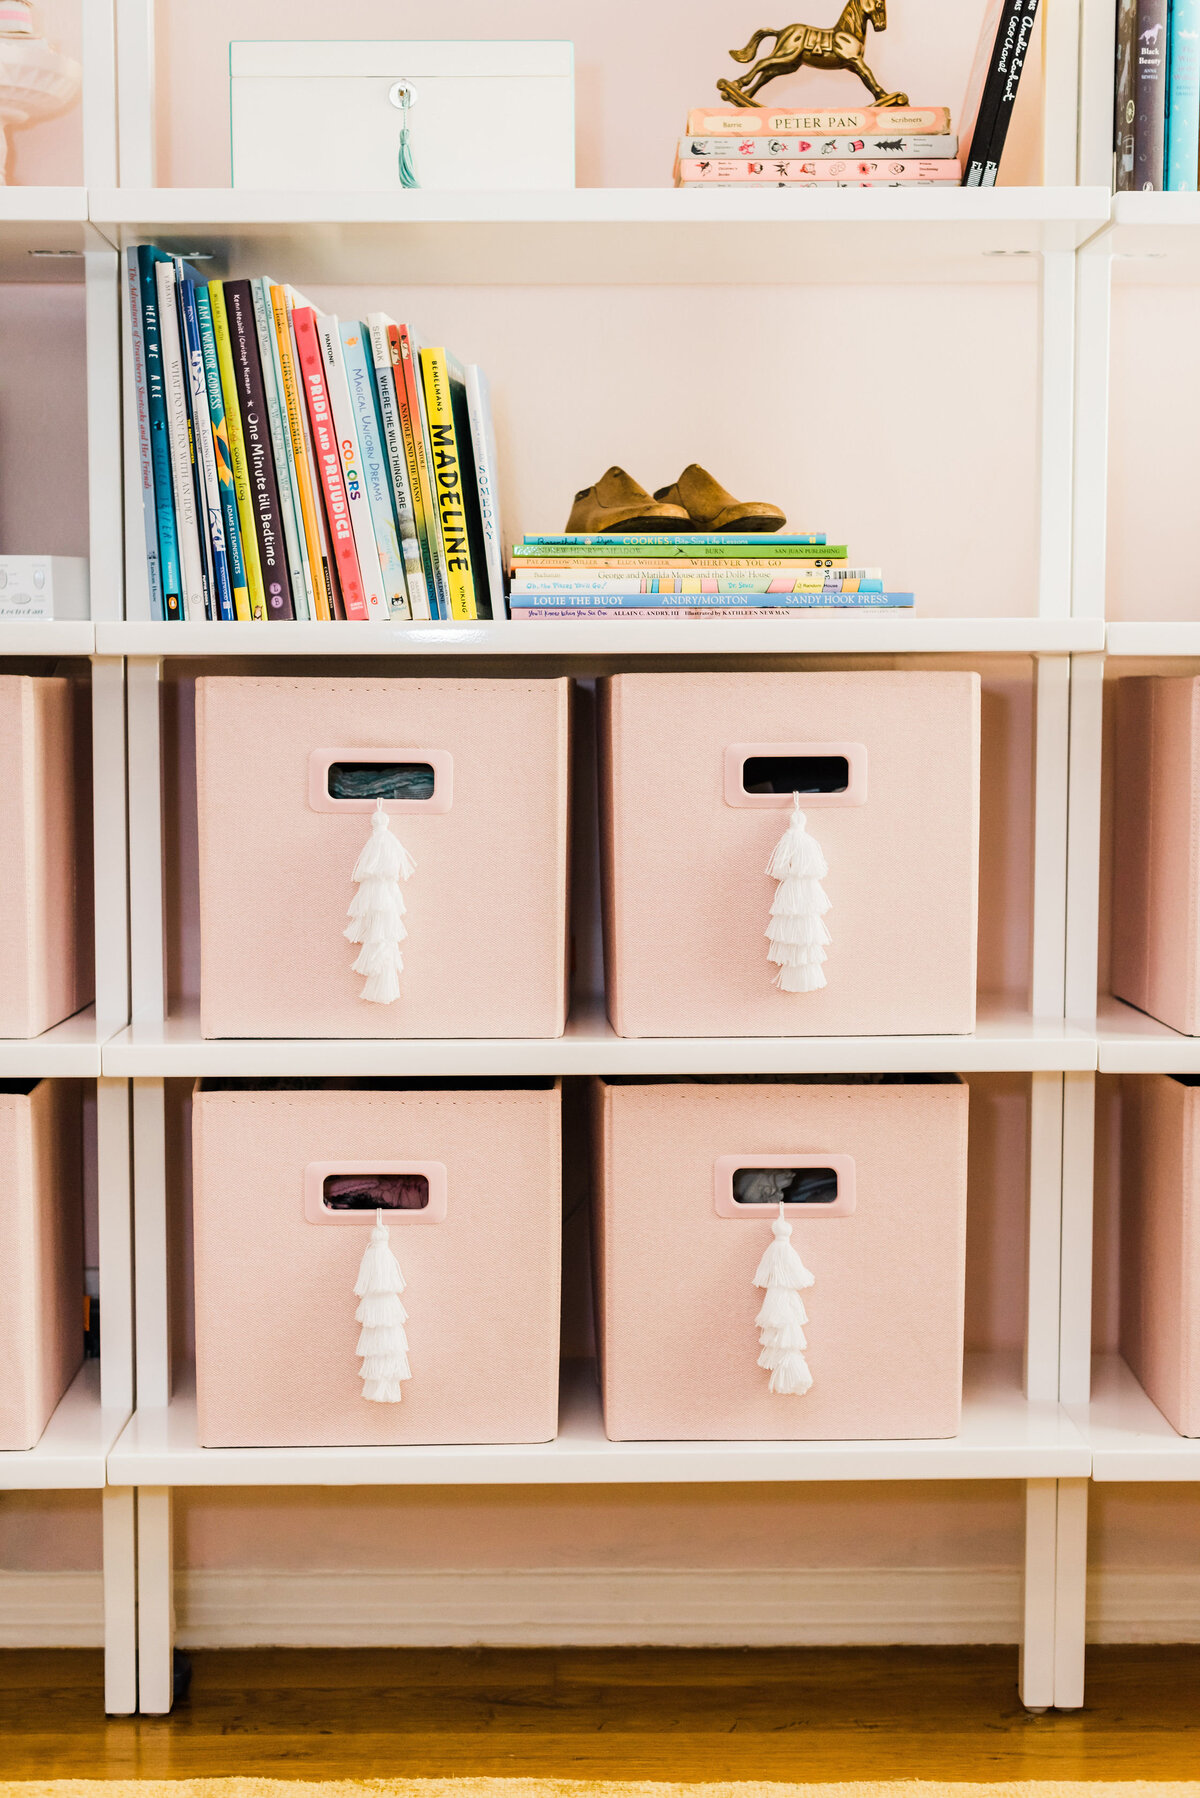 Nursery bookshelves with bins